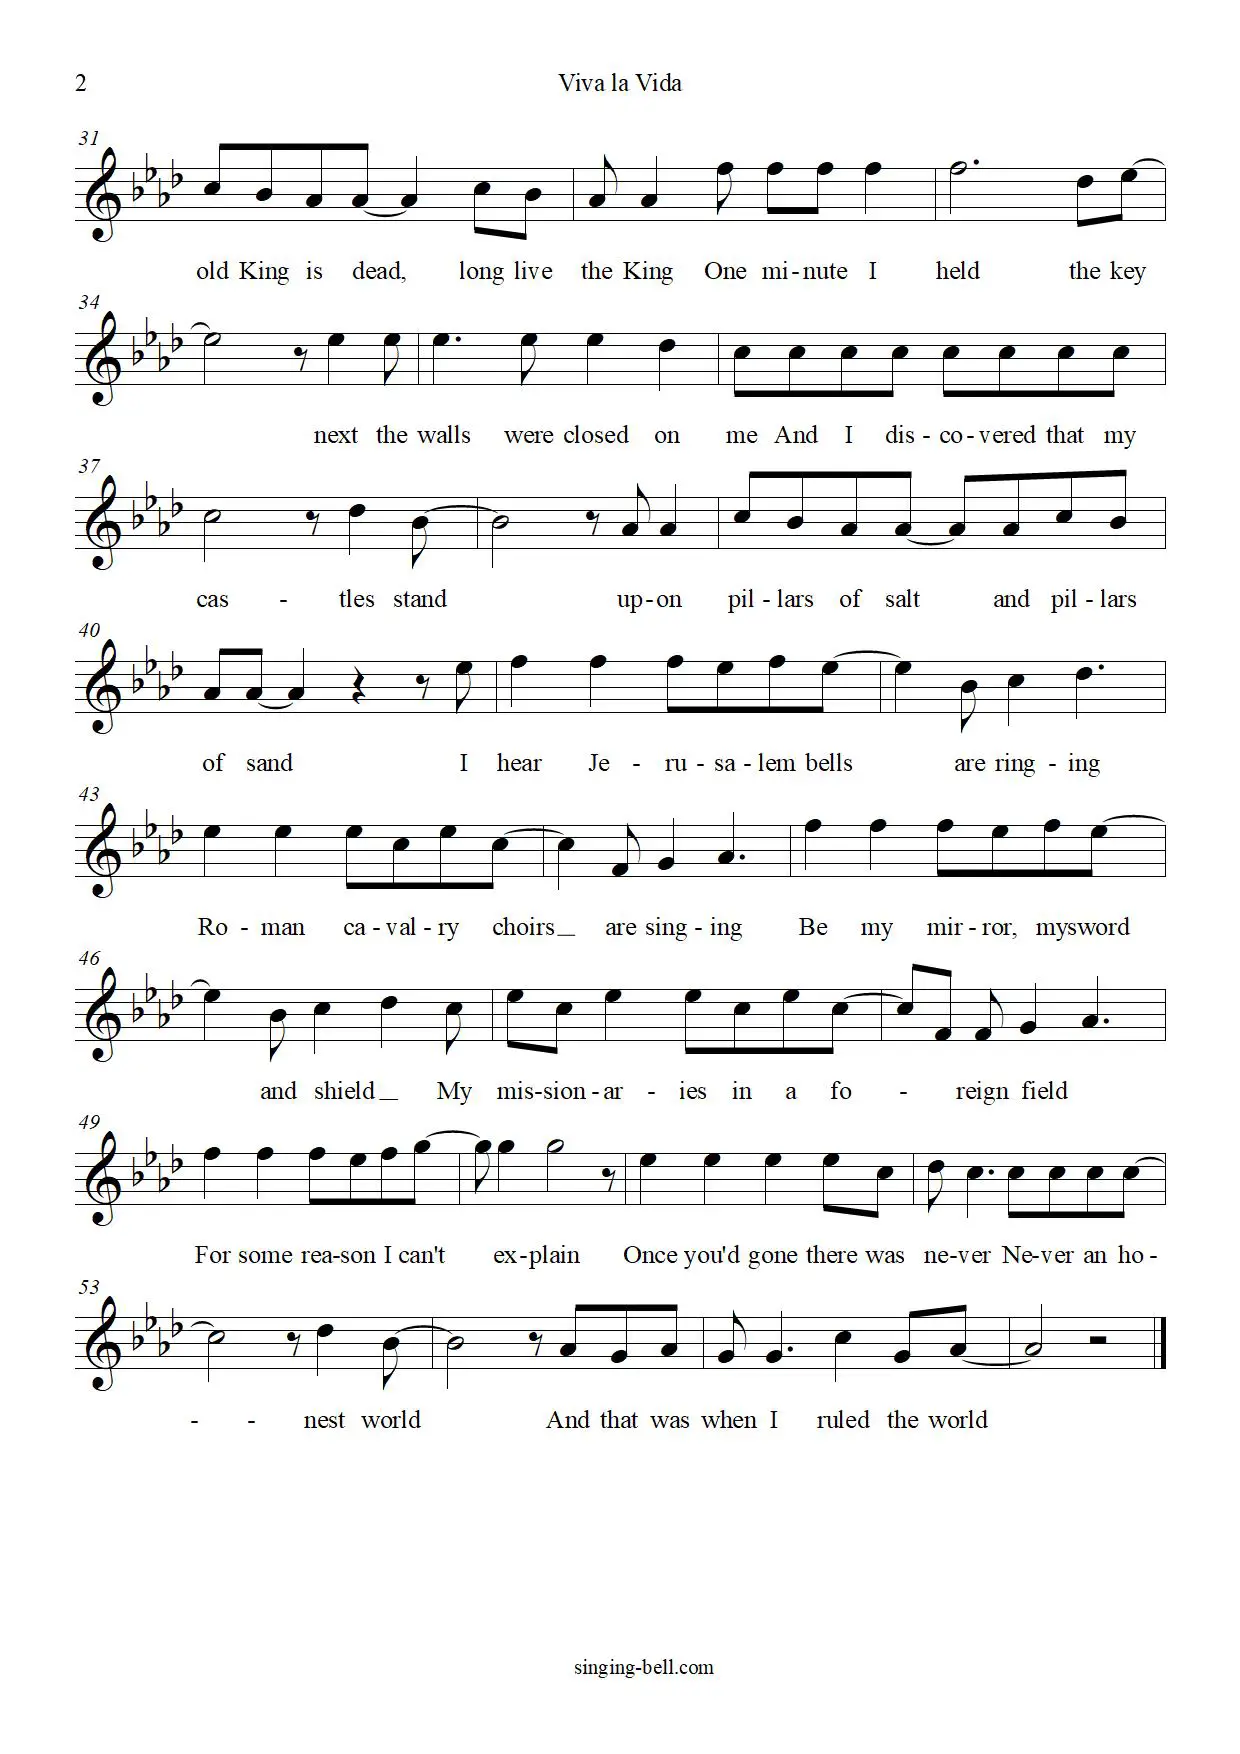 Viva la Vida free xylophone glockenspiel sheet music notes pdf page 2